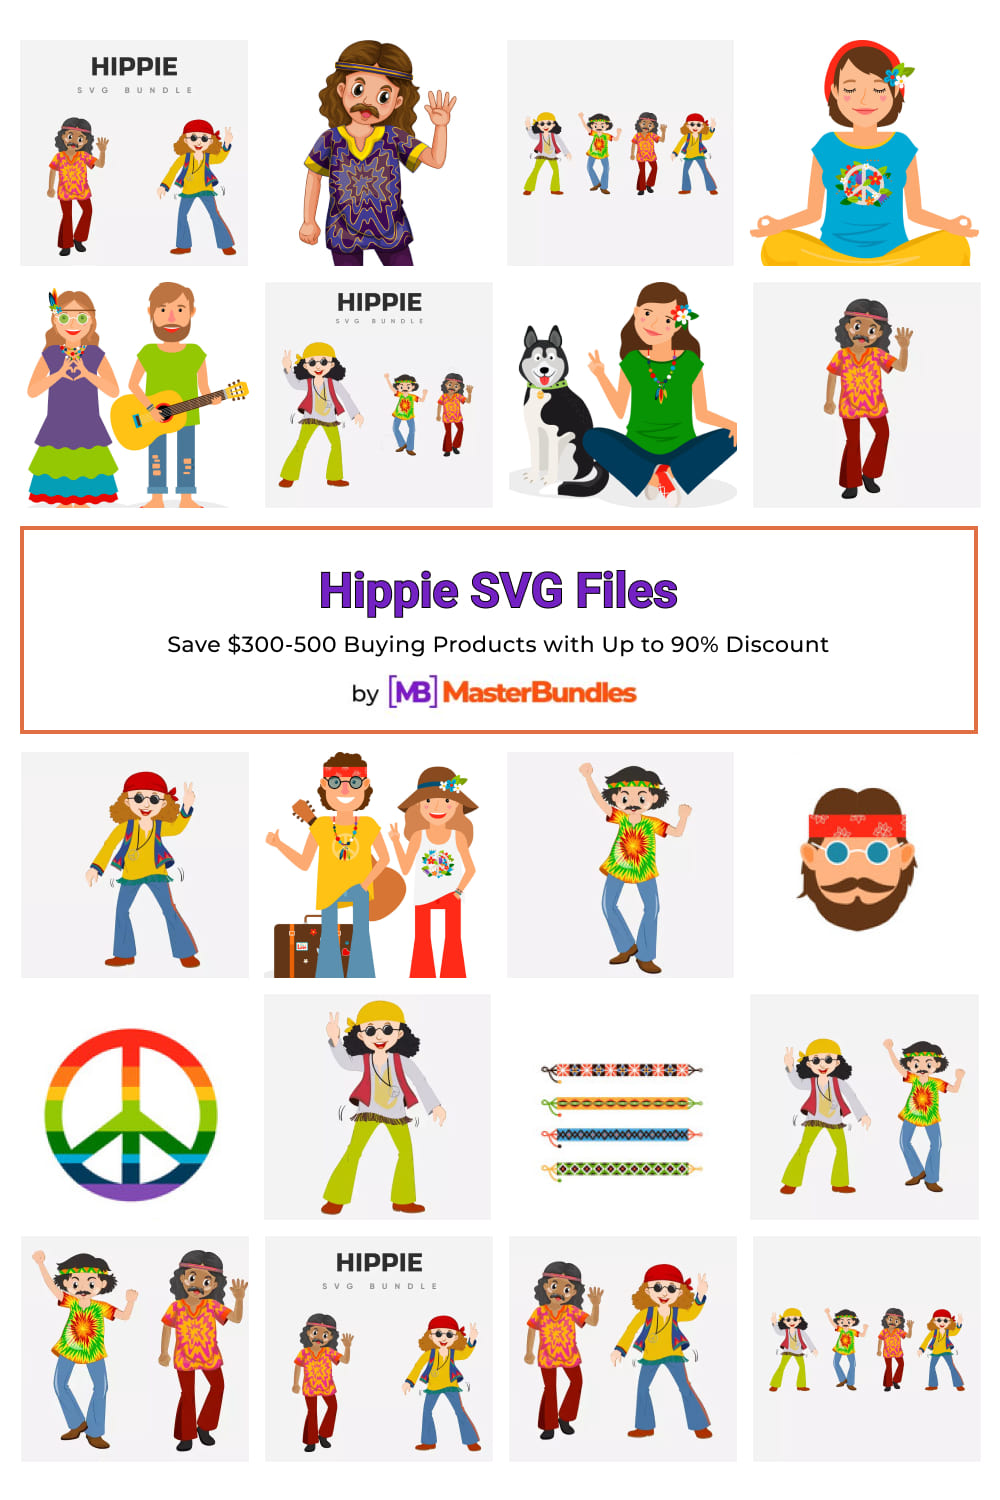 Hippie SVG Files Pinterest image.